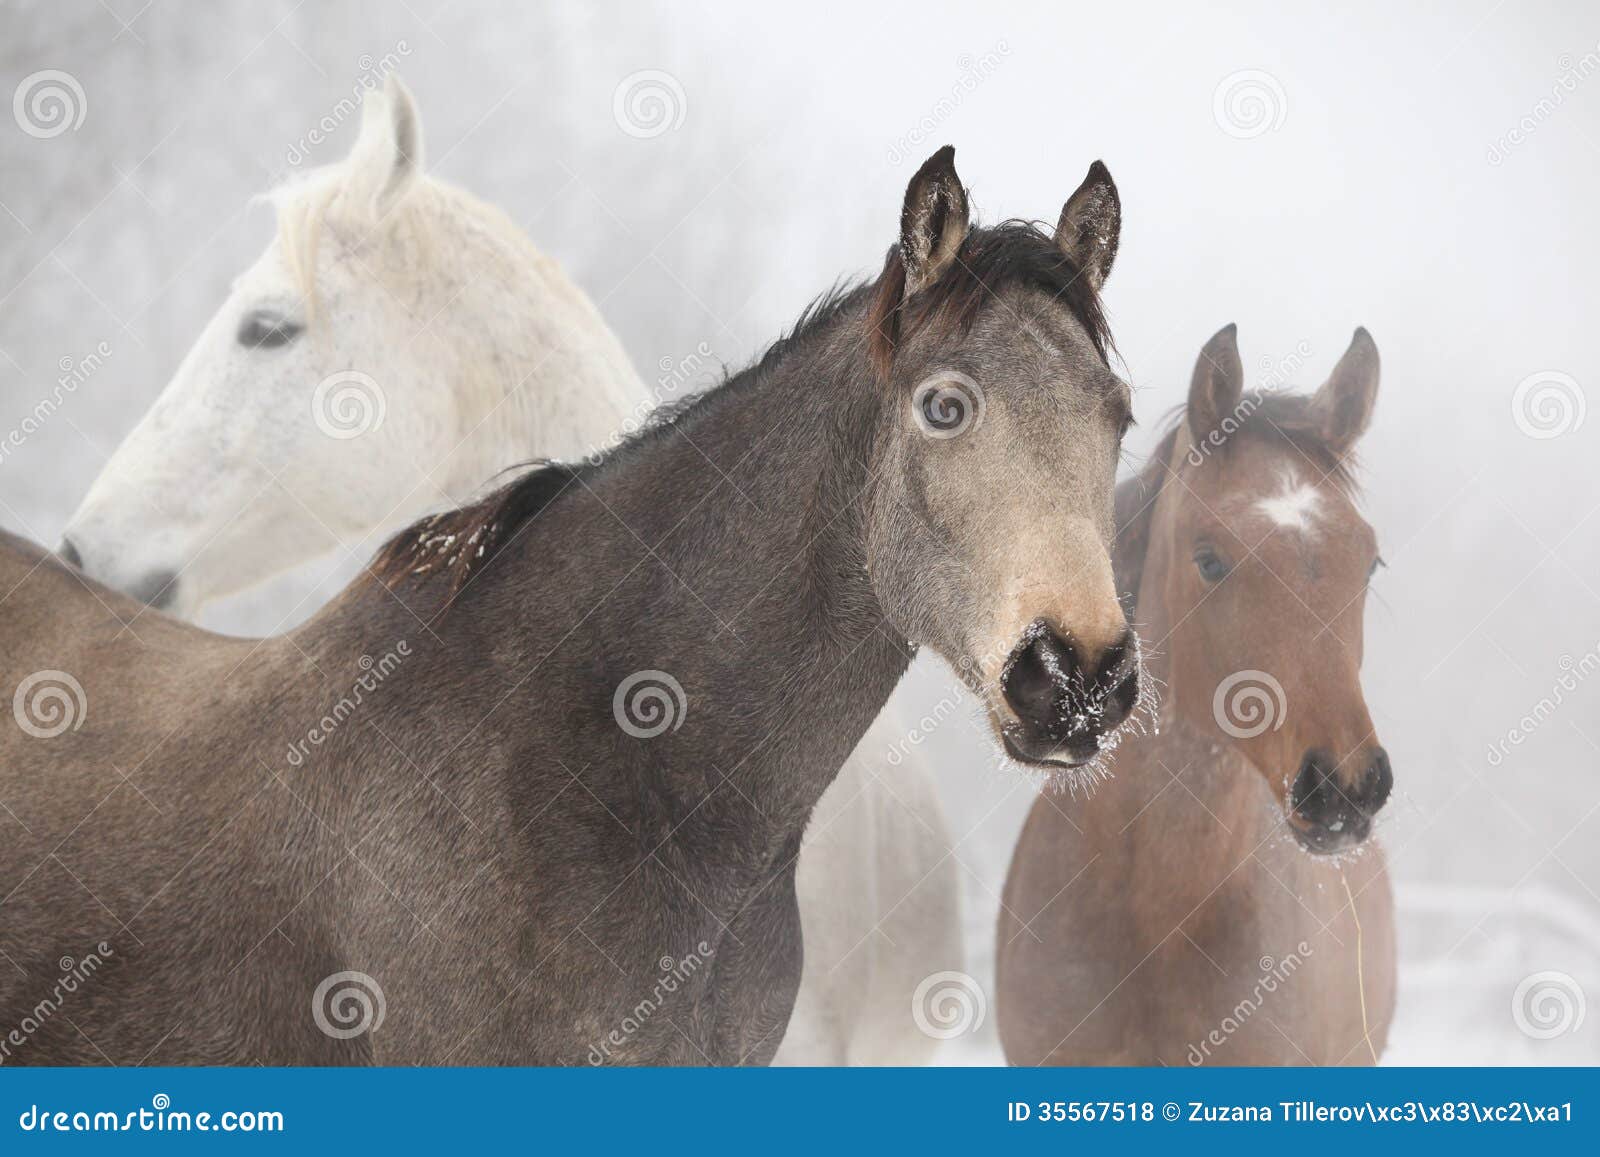 batch of horses in winter